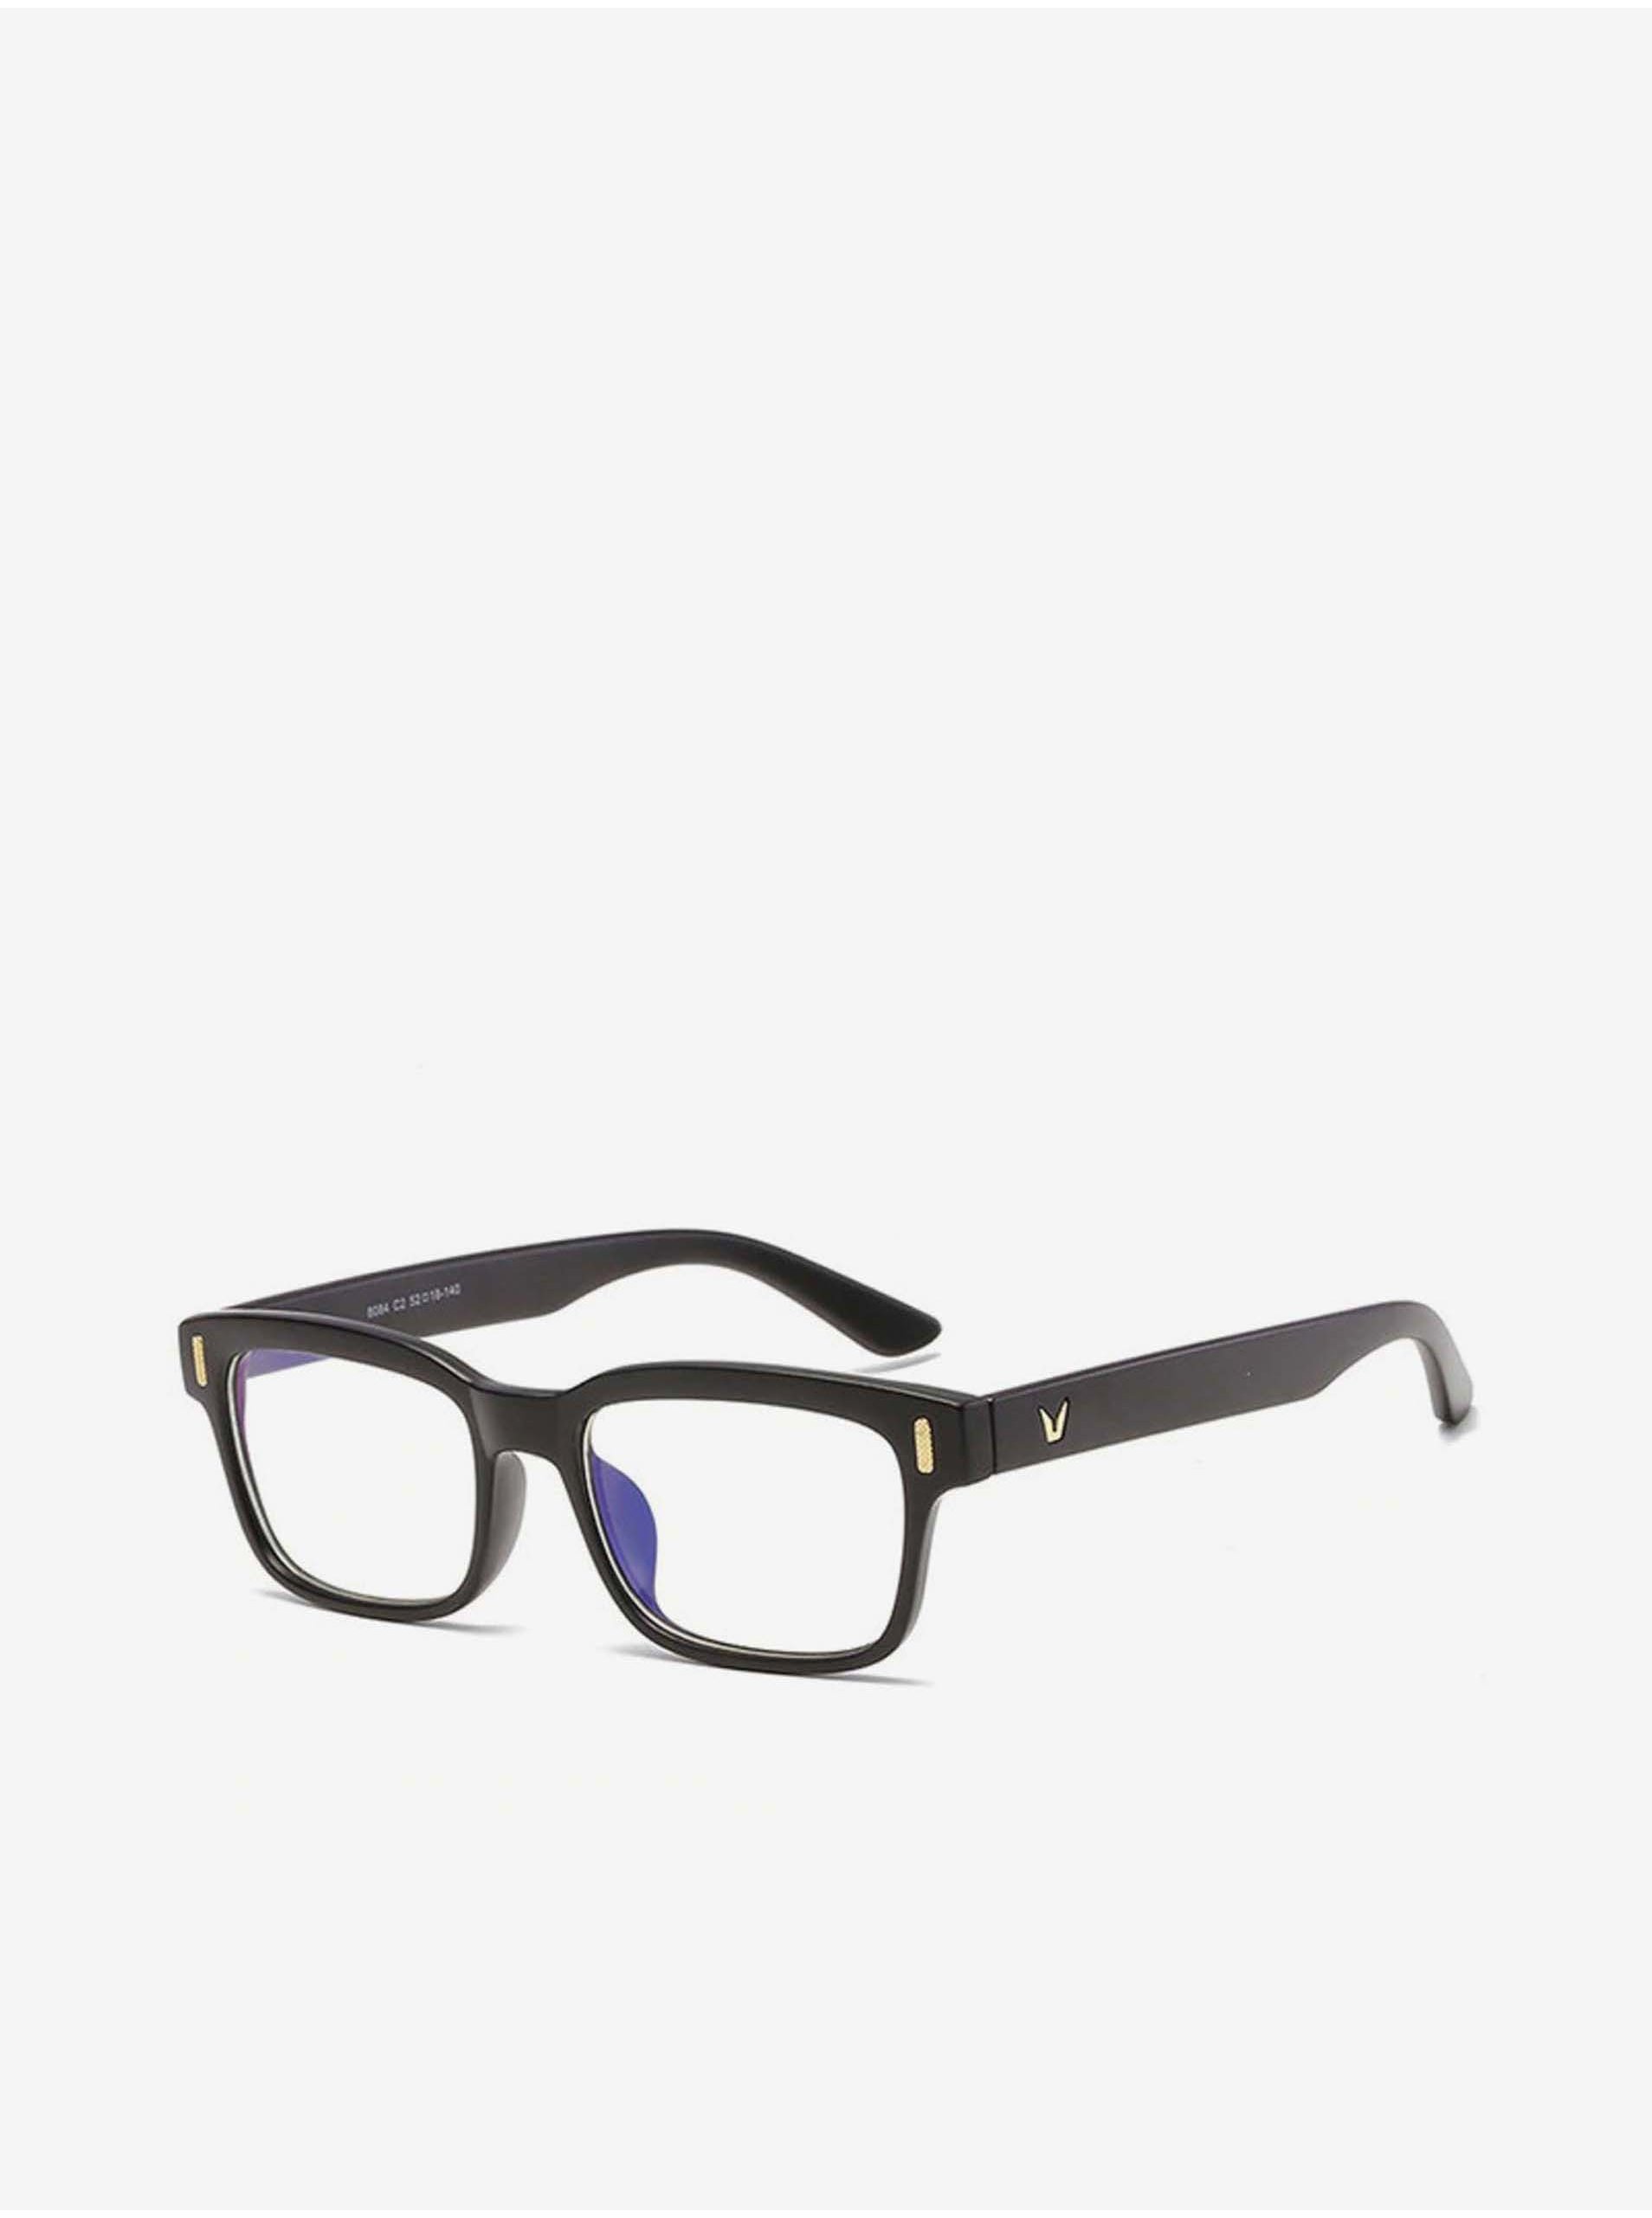 E-shop VeyRey Okuliare blokujúce modré svetlo Nerd Nigel čierne